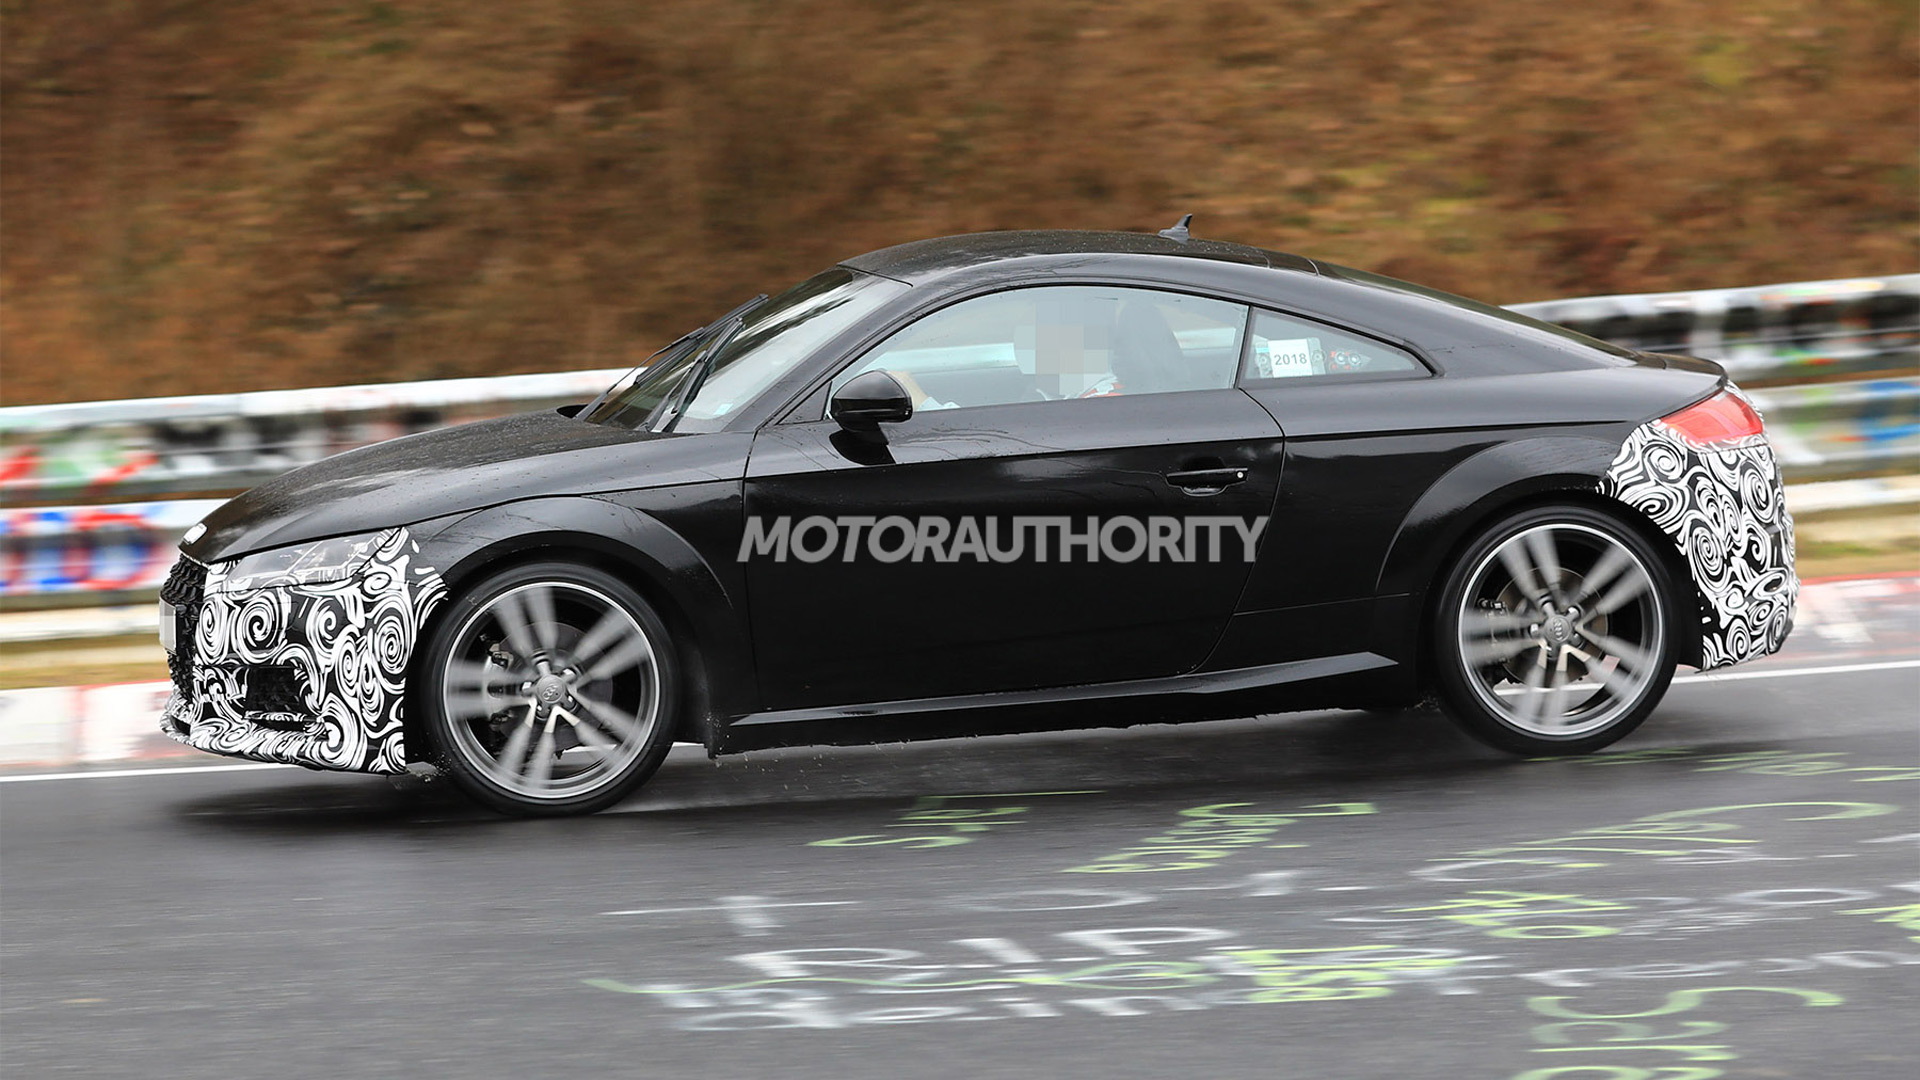 2020 Audi TT facelift spy shots - Image via S. Baldauf/SB-Medien